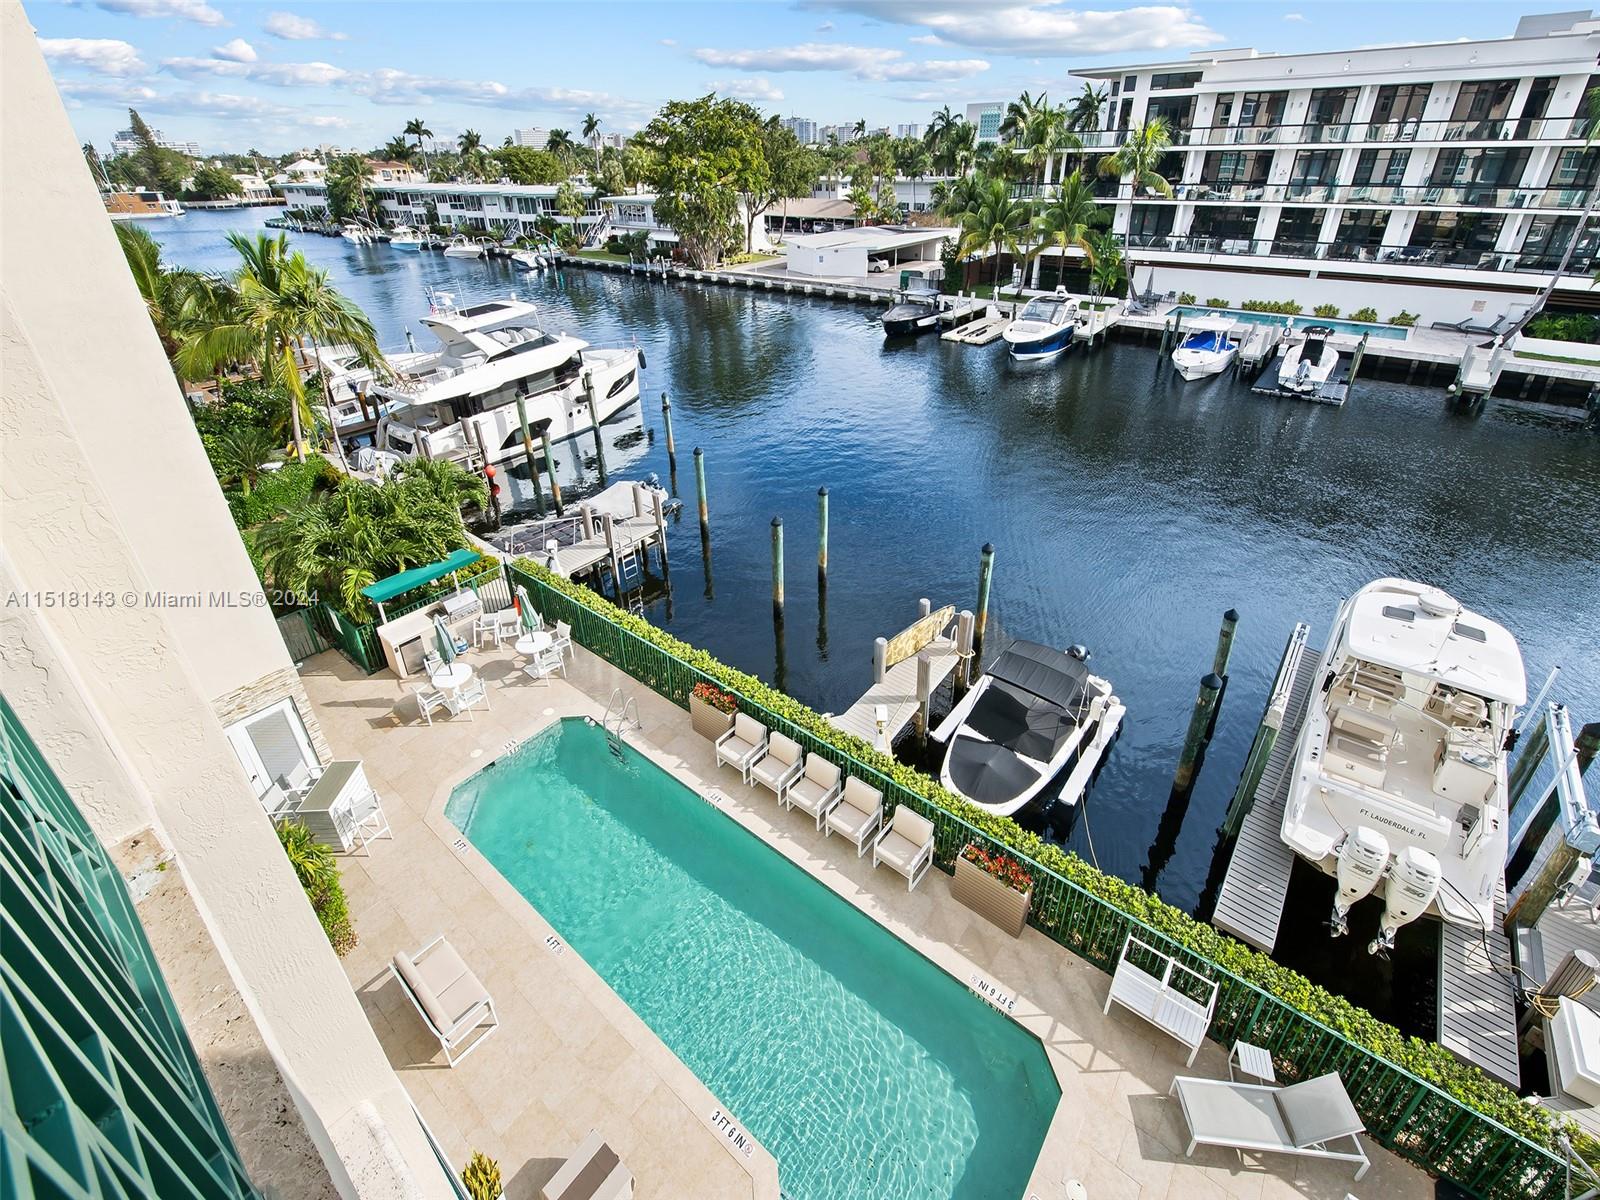 Property for Sale at 400 Hendricks Isle Isle 402, Fort Lauderdale, Broward County, Florida - Bedrooms: 2 
Bathrooms: 3  - $1,250,000